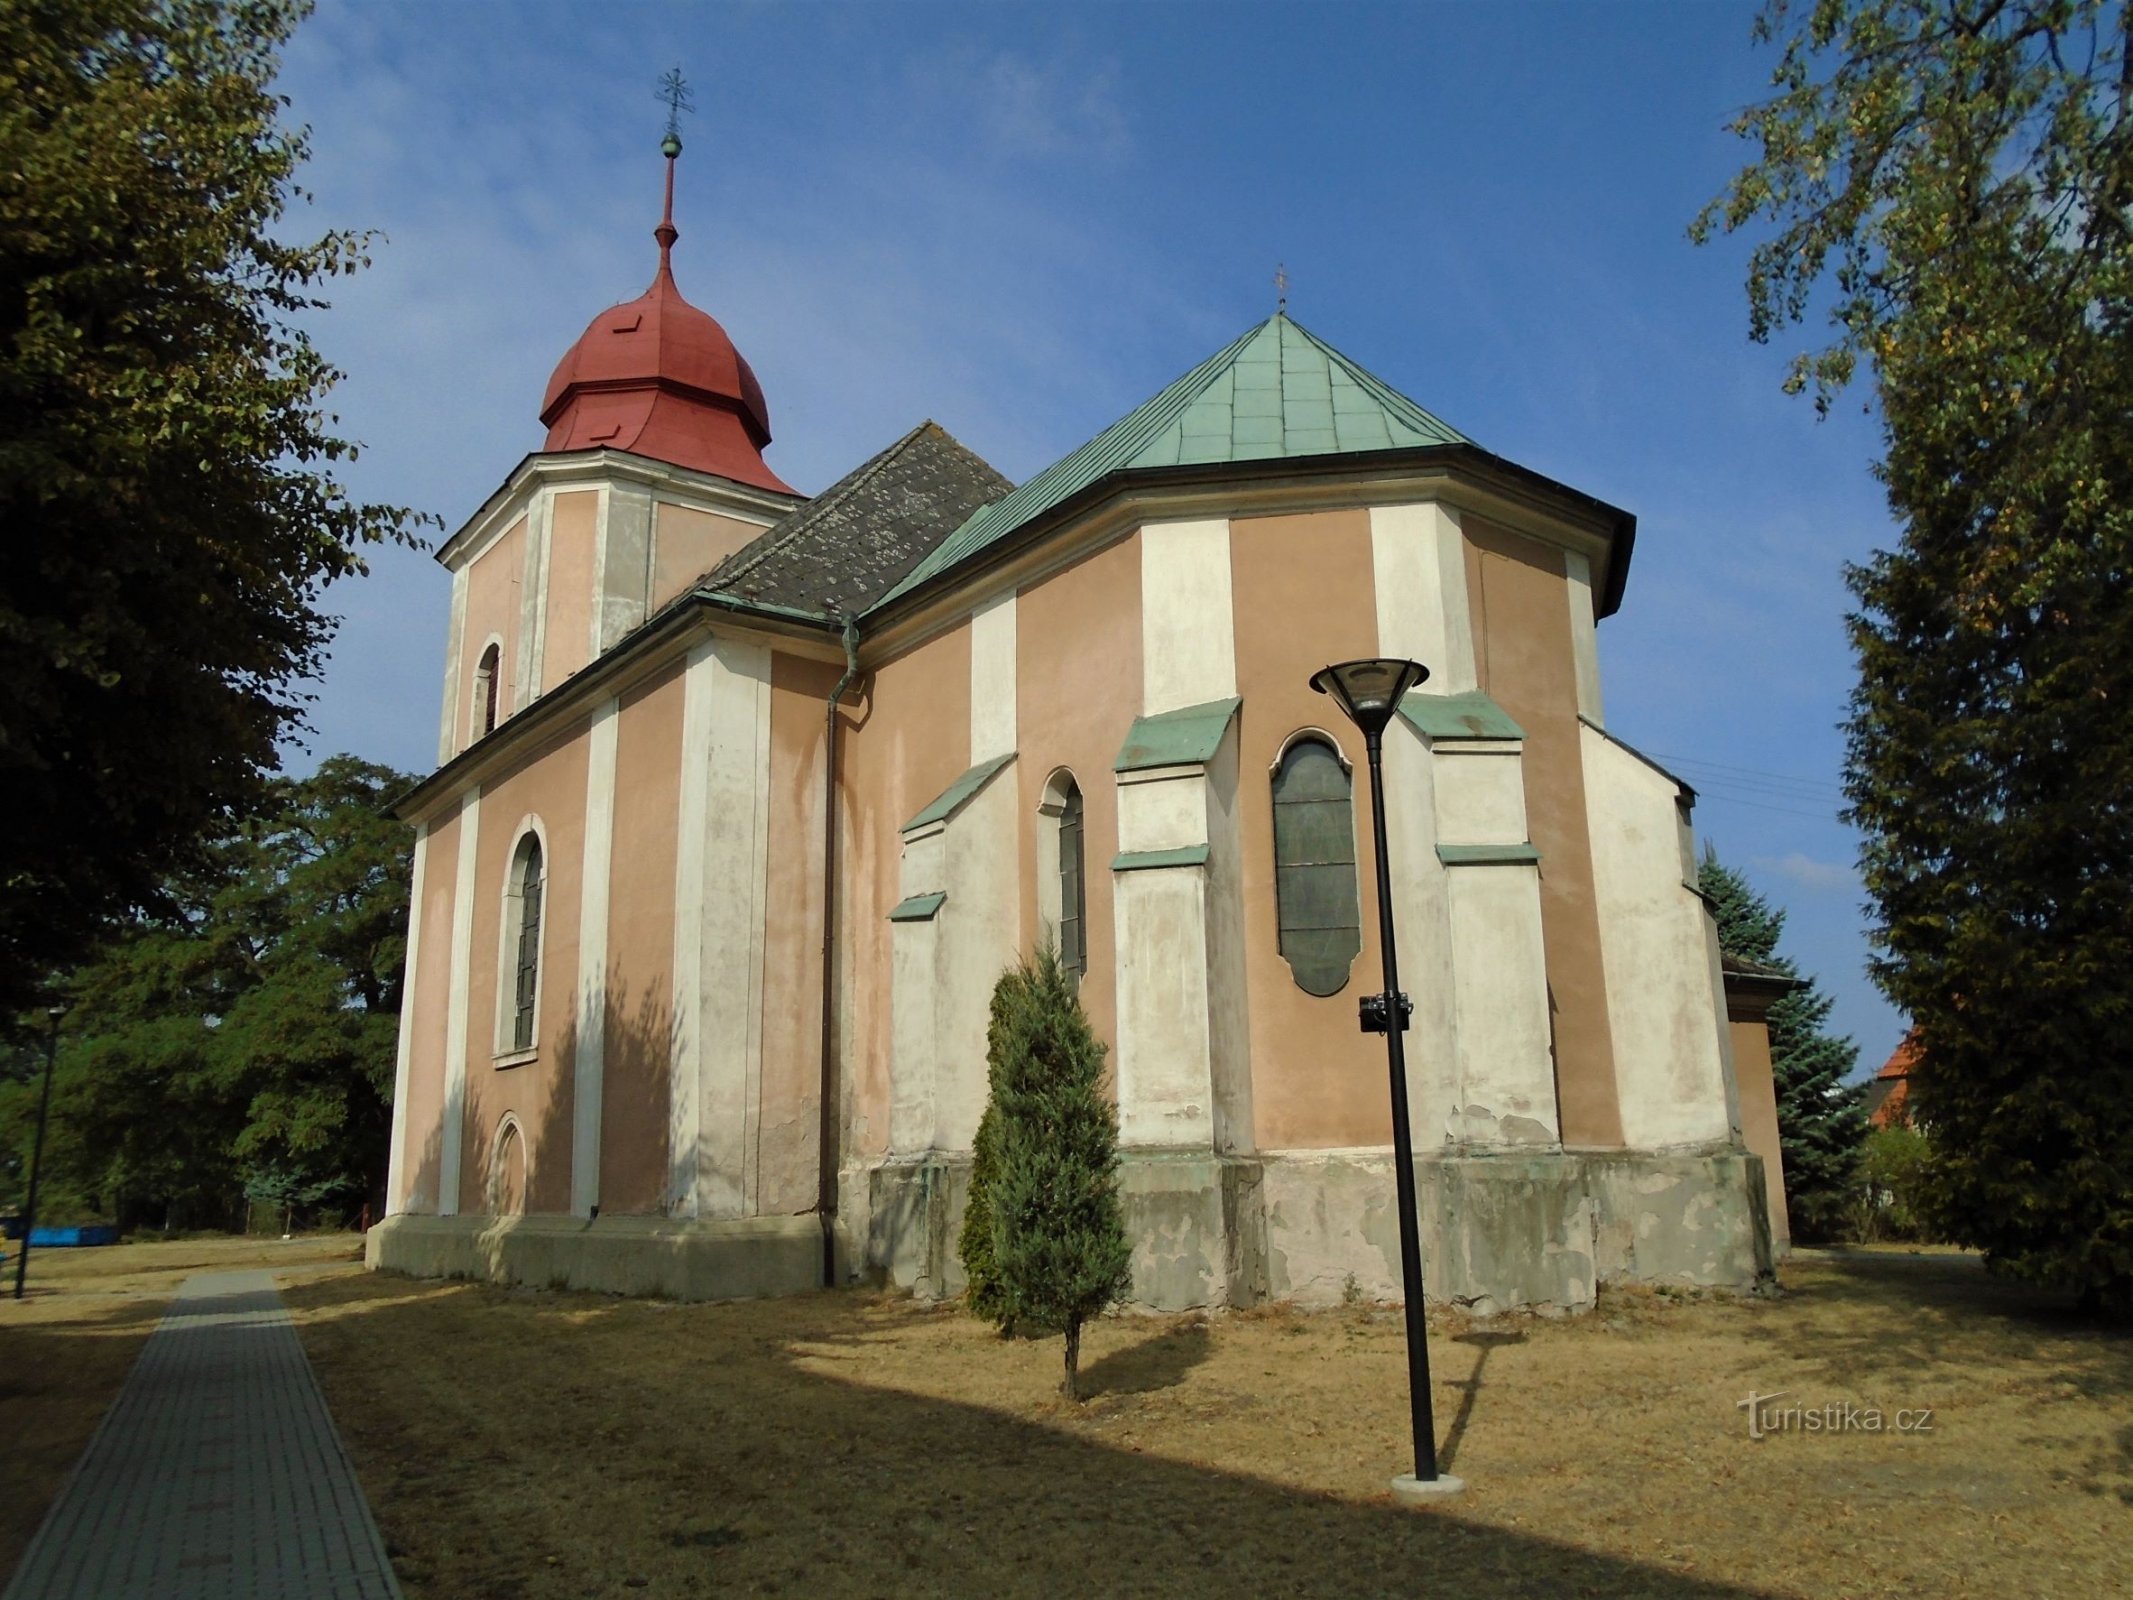 Cerkev sv. Petra in Pavla (Rohovládova Bělá, 31.8.2018. avgust XNUMX)